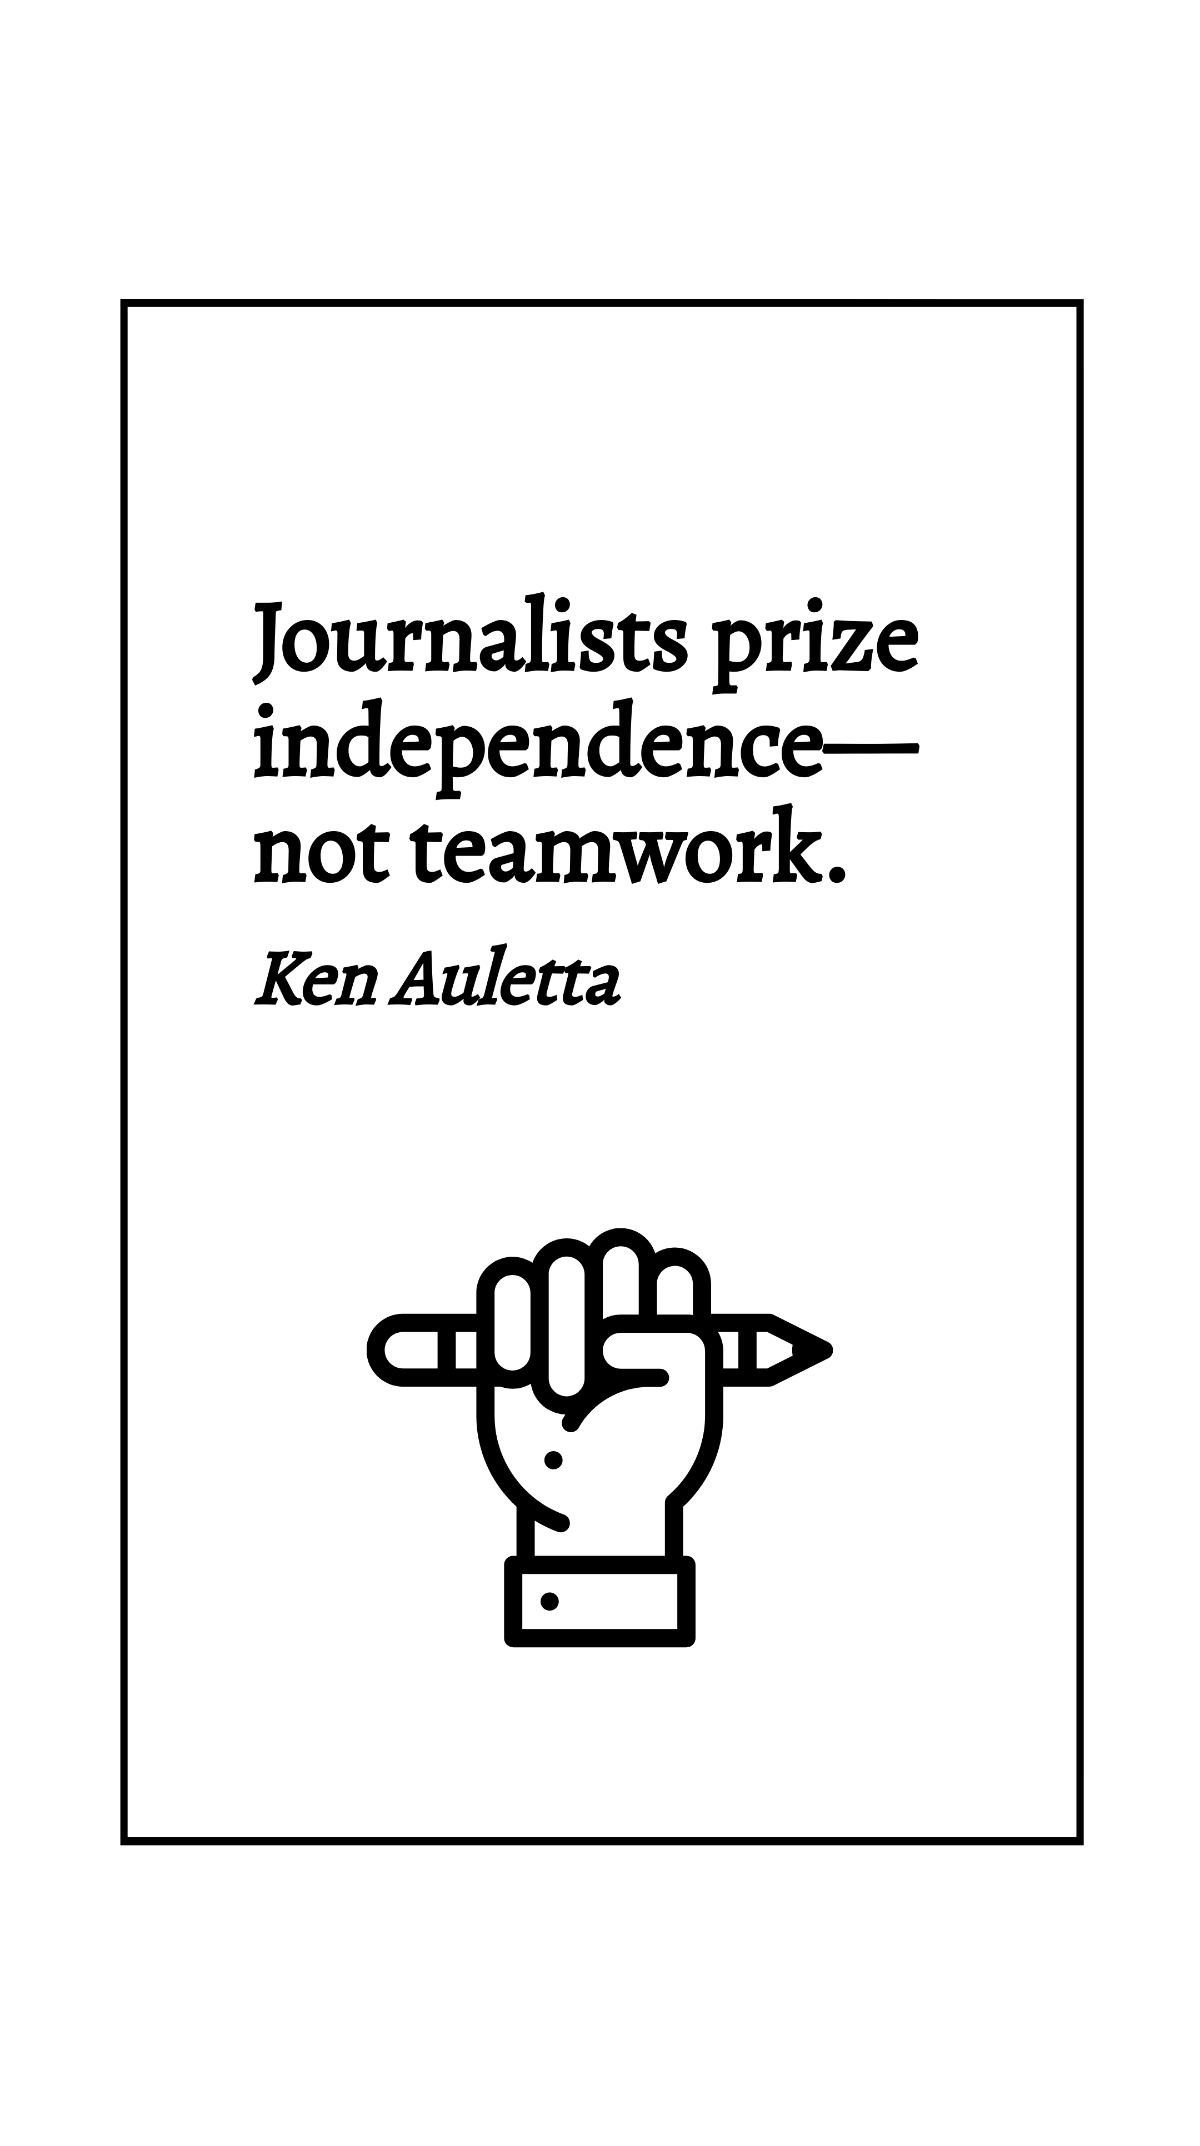 Ken Auletta - Journalists prize independence - not teamwork. Template